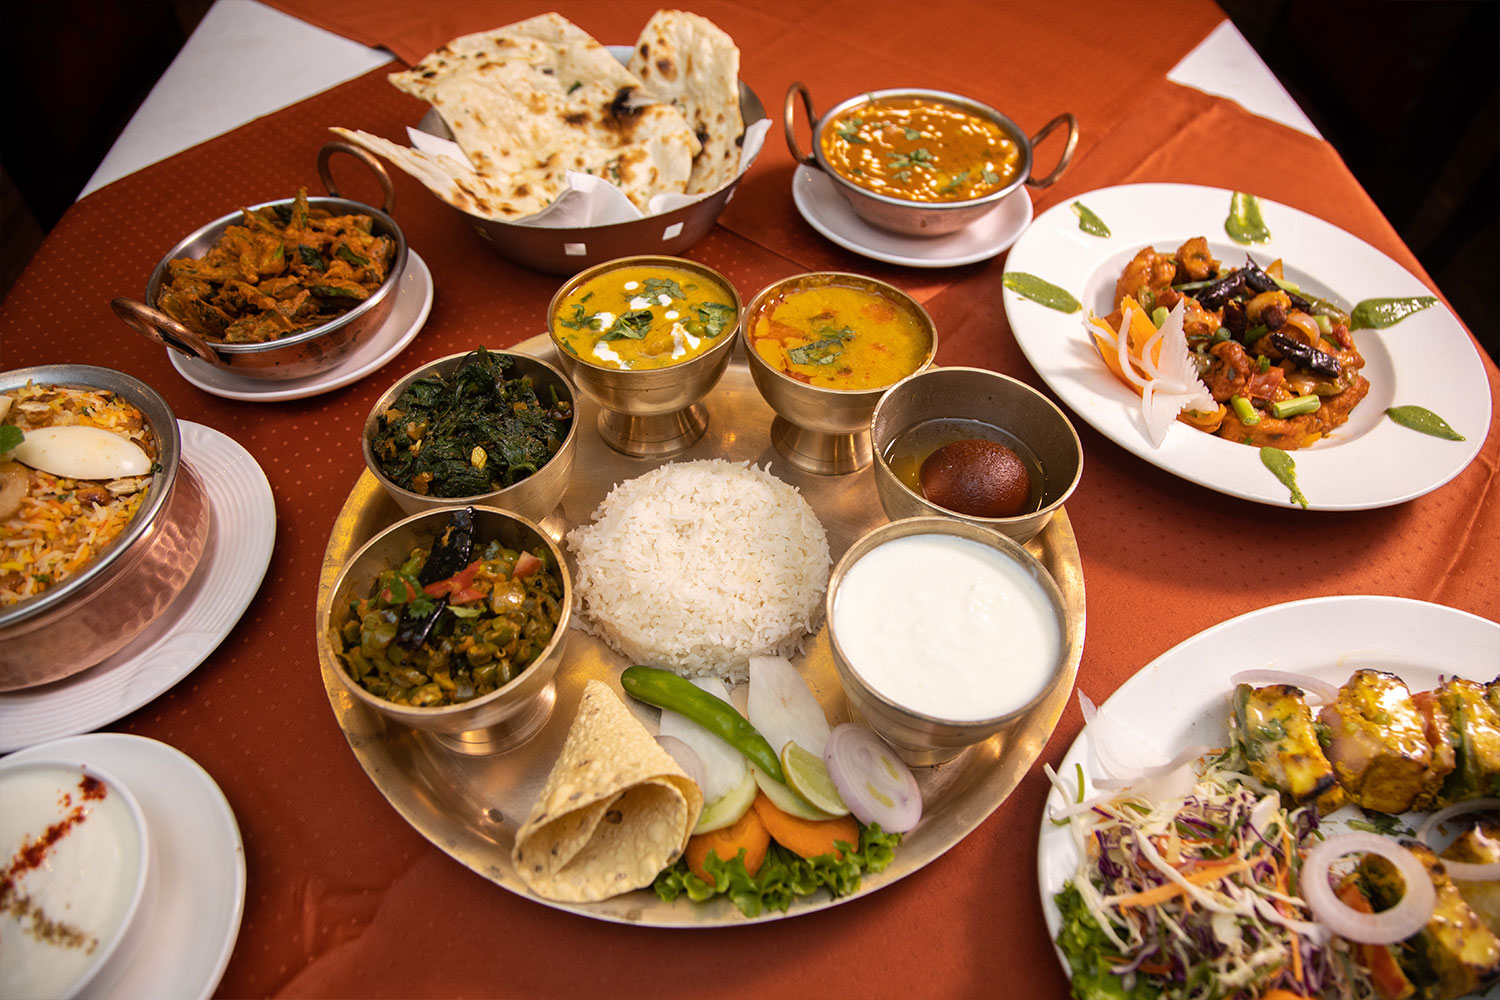 Maharaja Restaurant